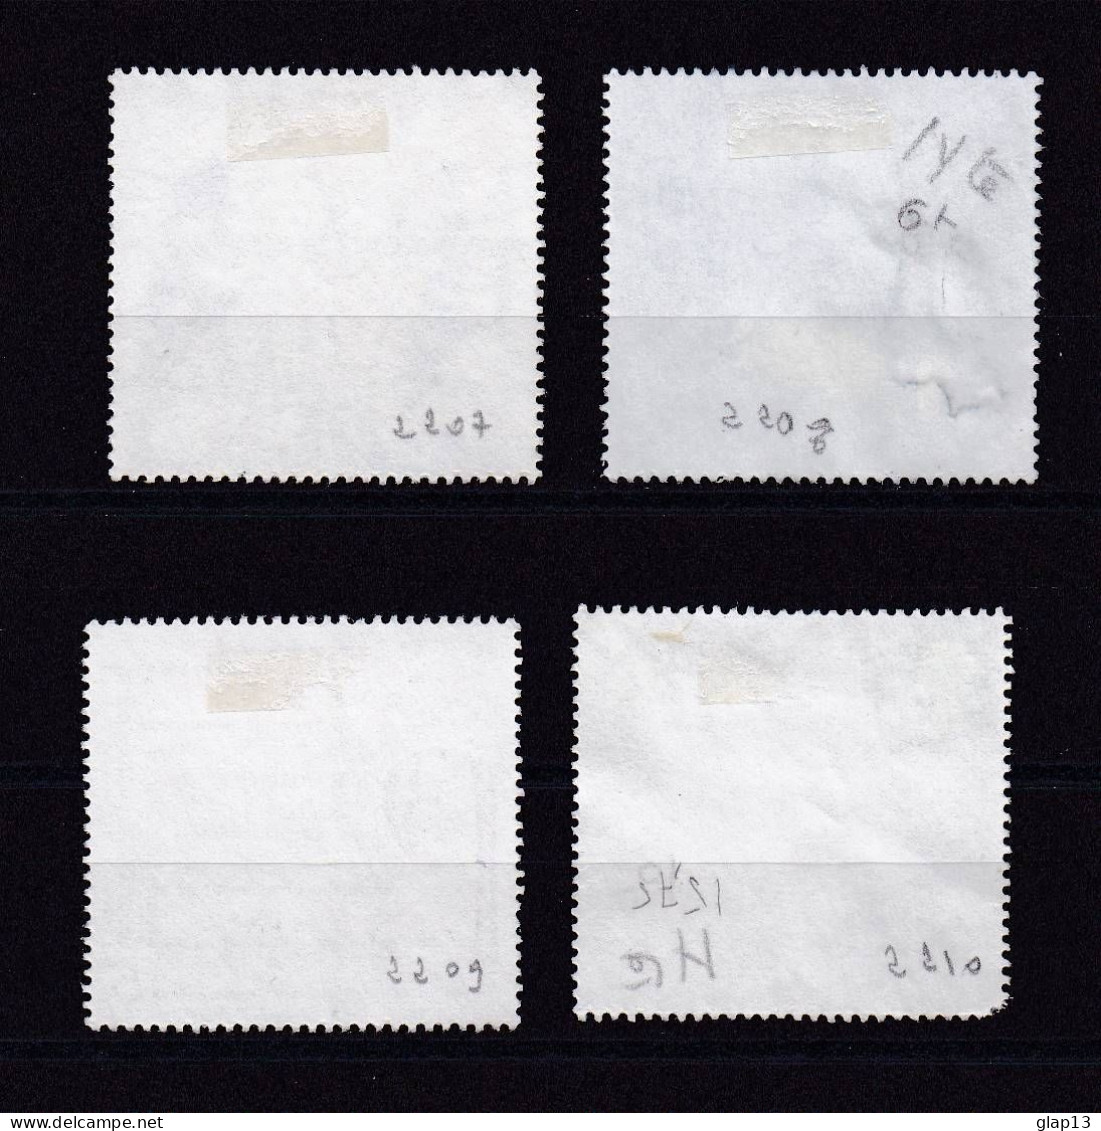 GRANDE-BRETAGNE 2000 TIMBRE N°2207/10 OBLITERE NOUVEAU MILLENAIRE - Used Stamps